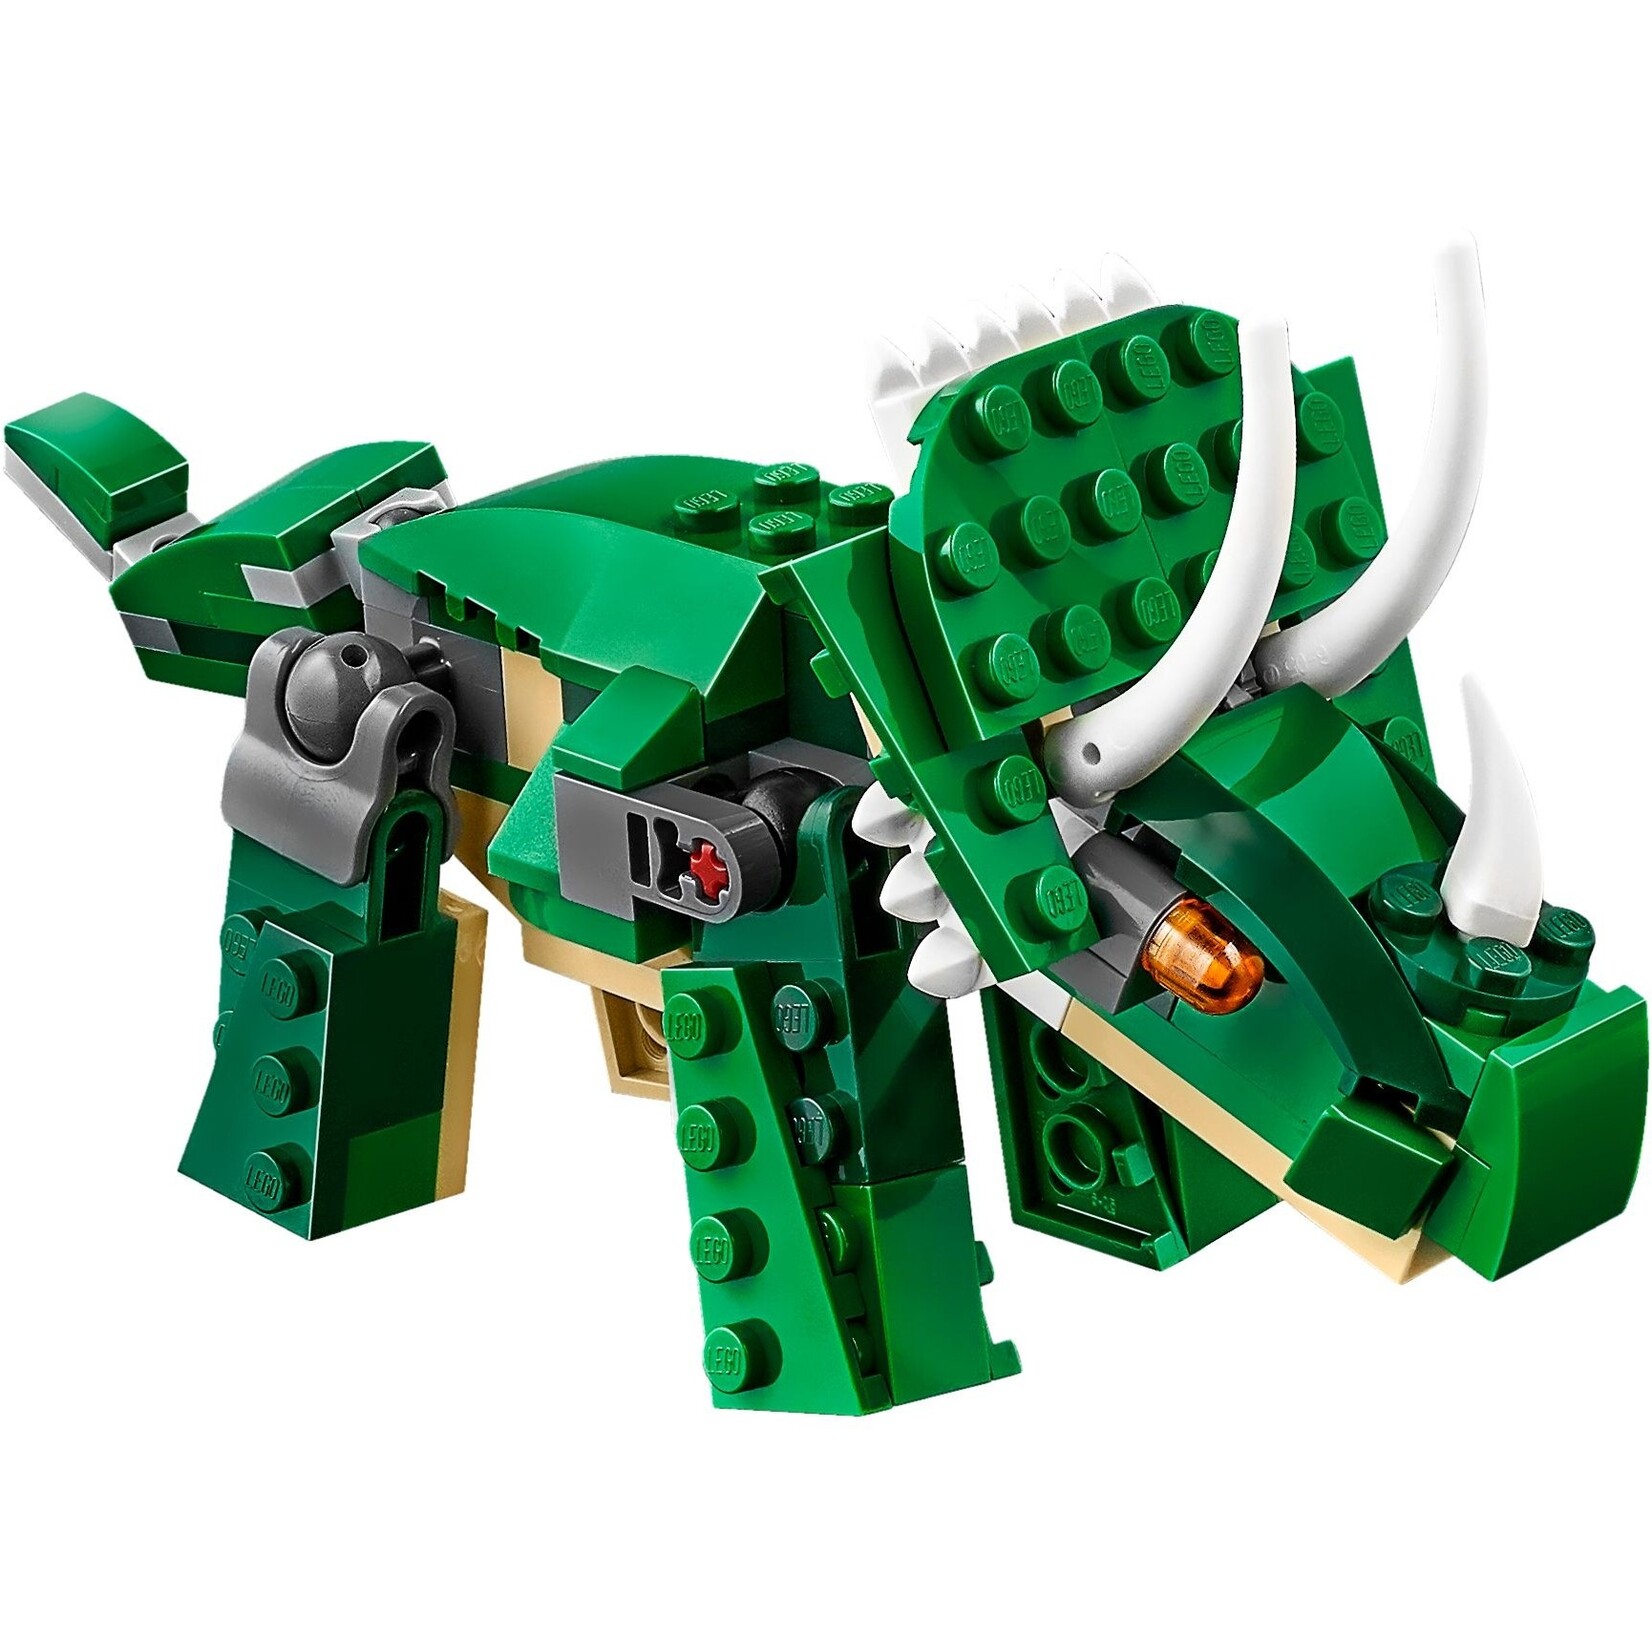 LEGO Machtige dinosaurussen - 31058